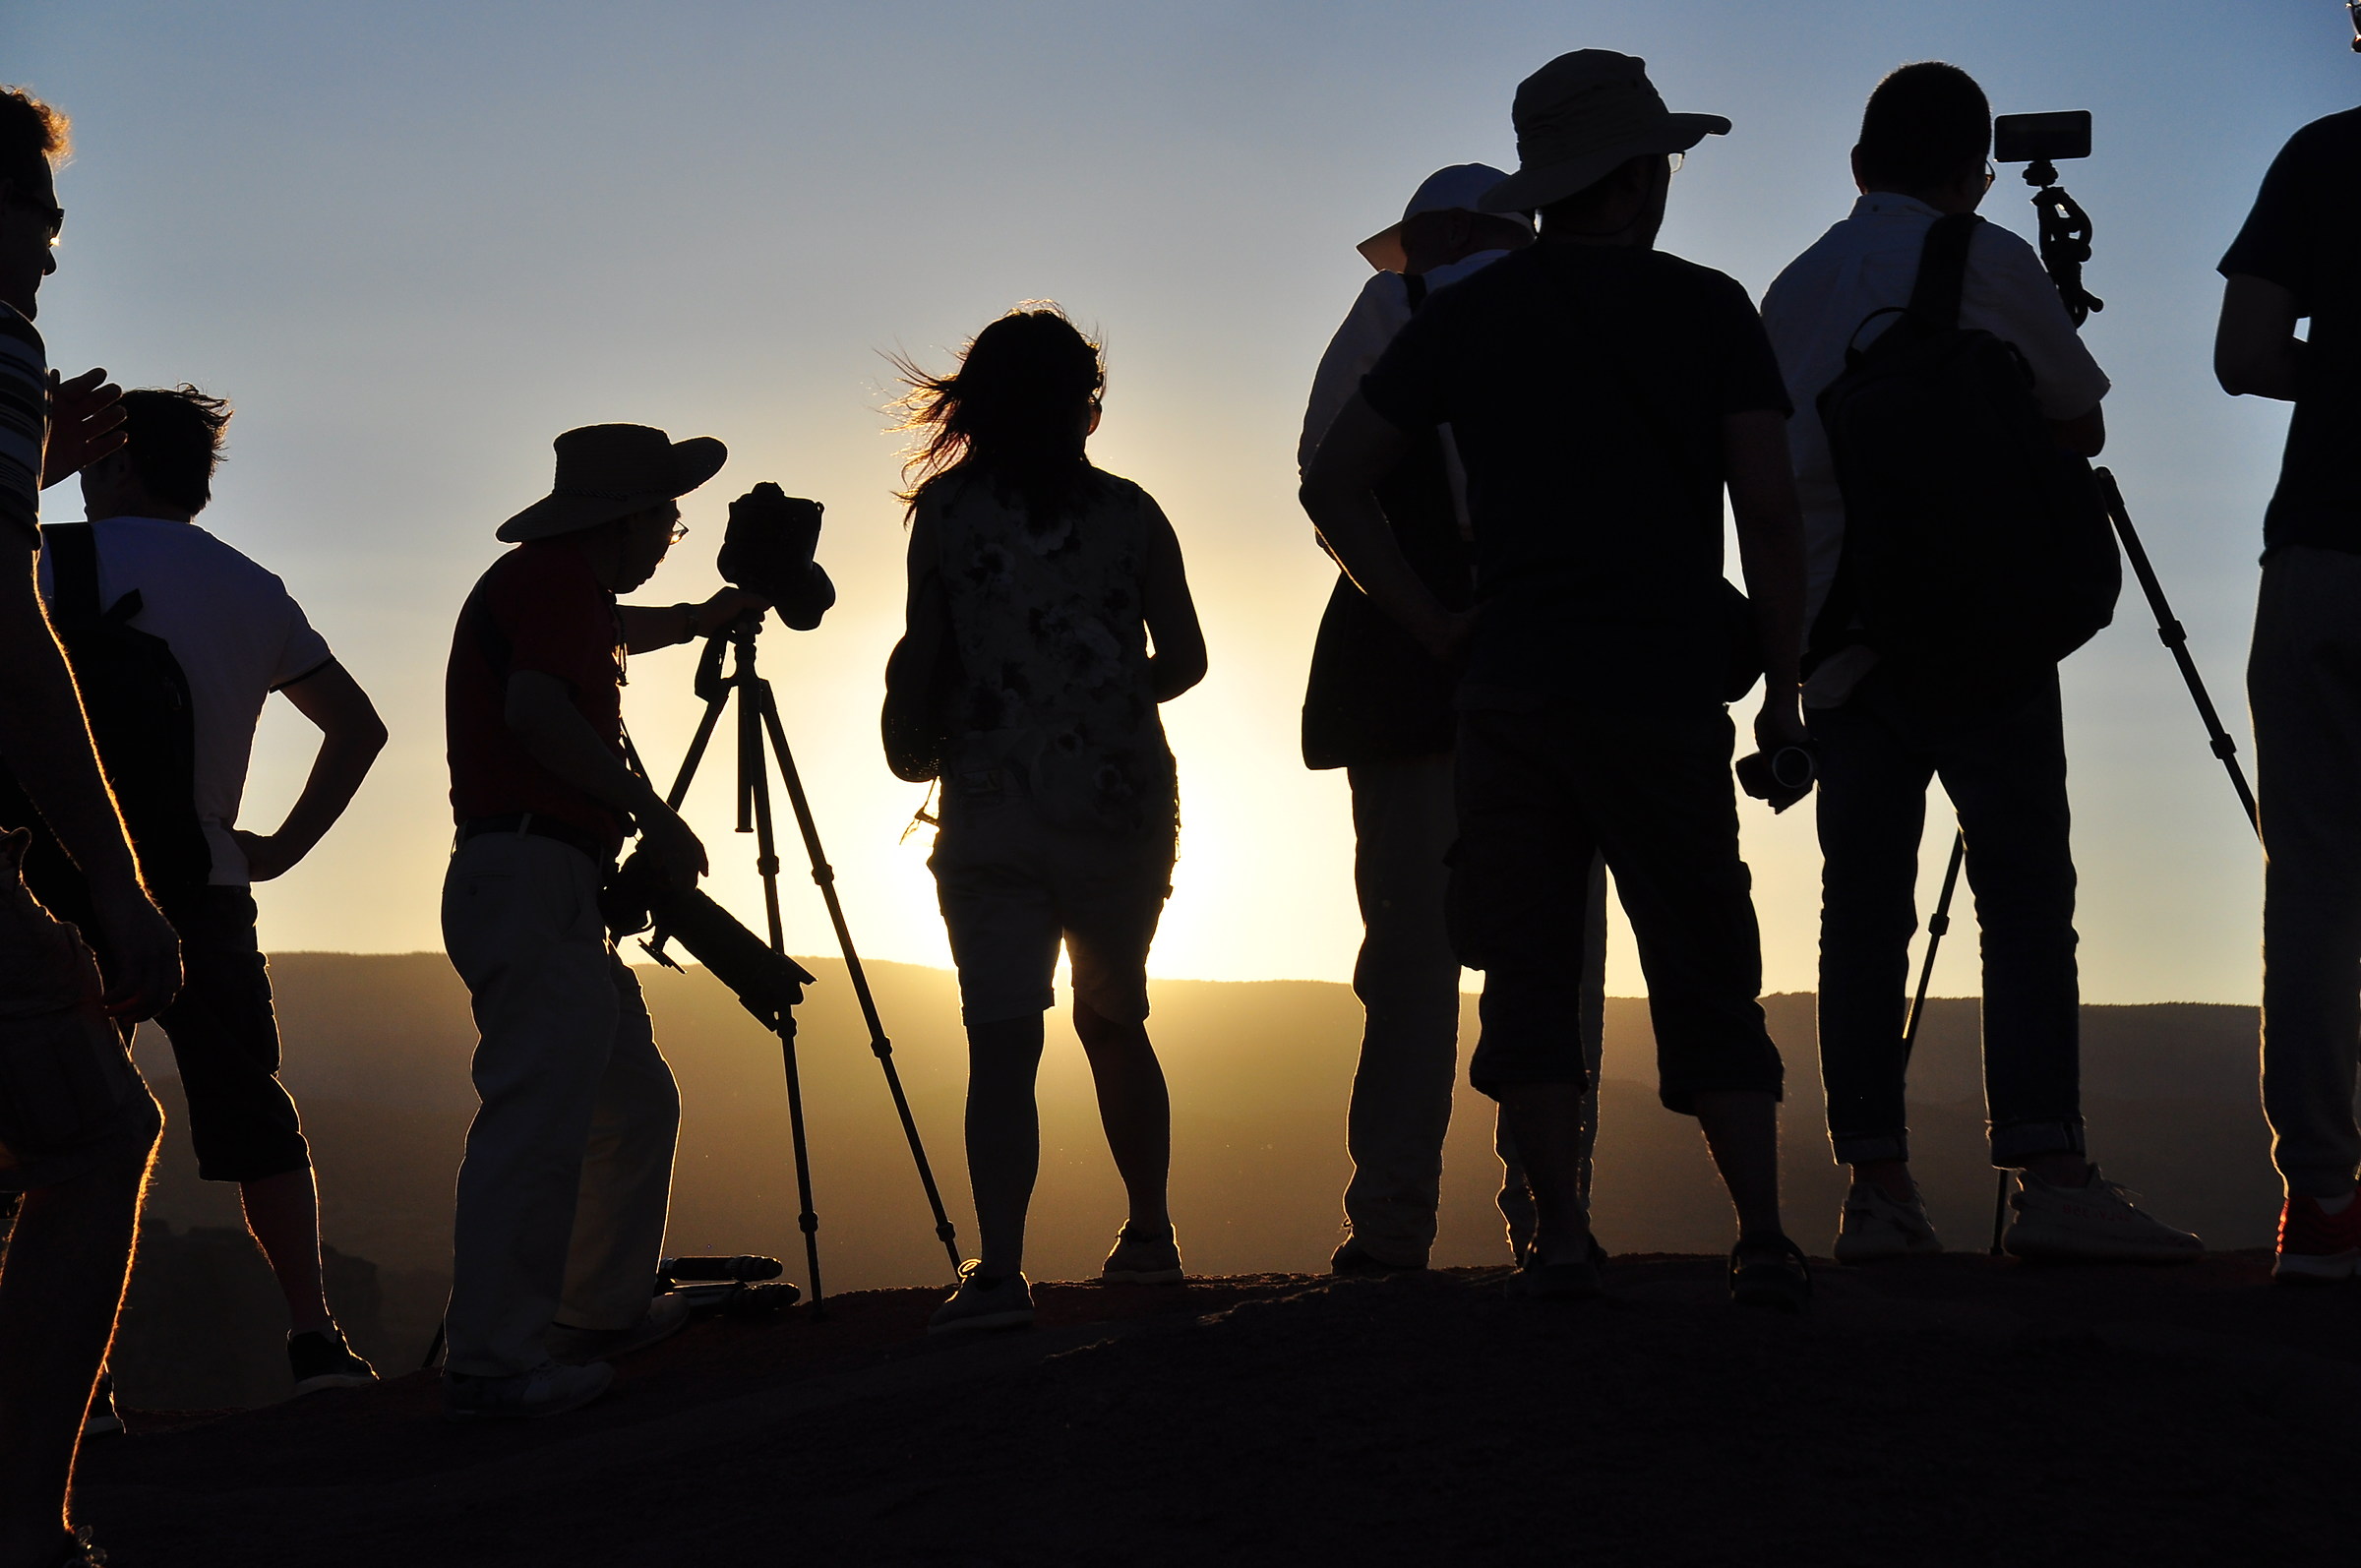 Photographers at sunset...